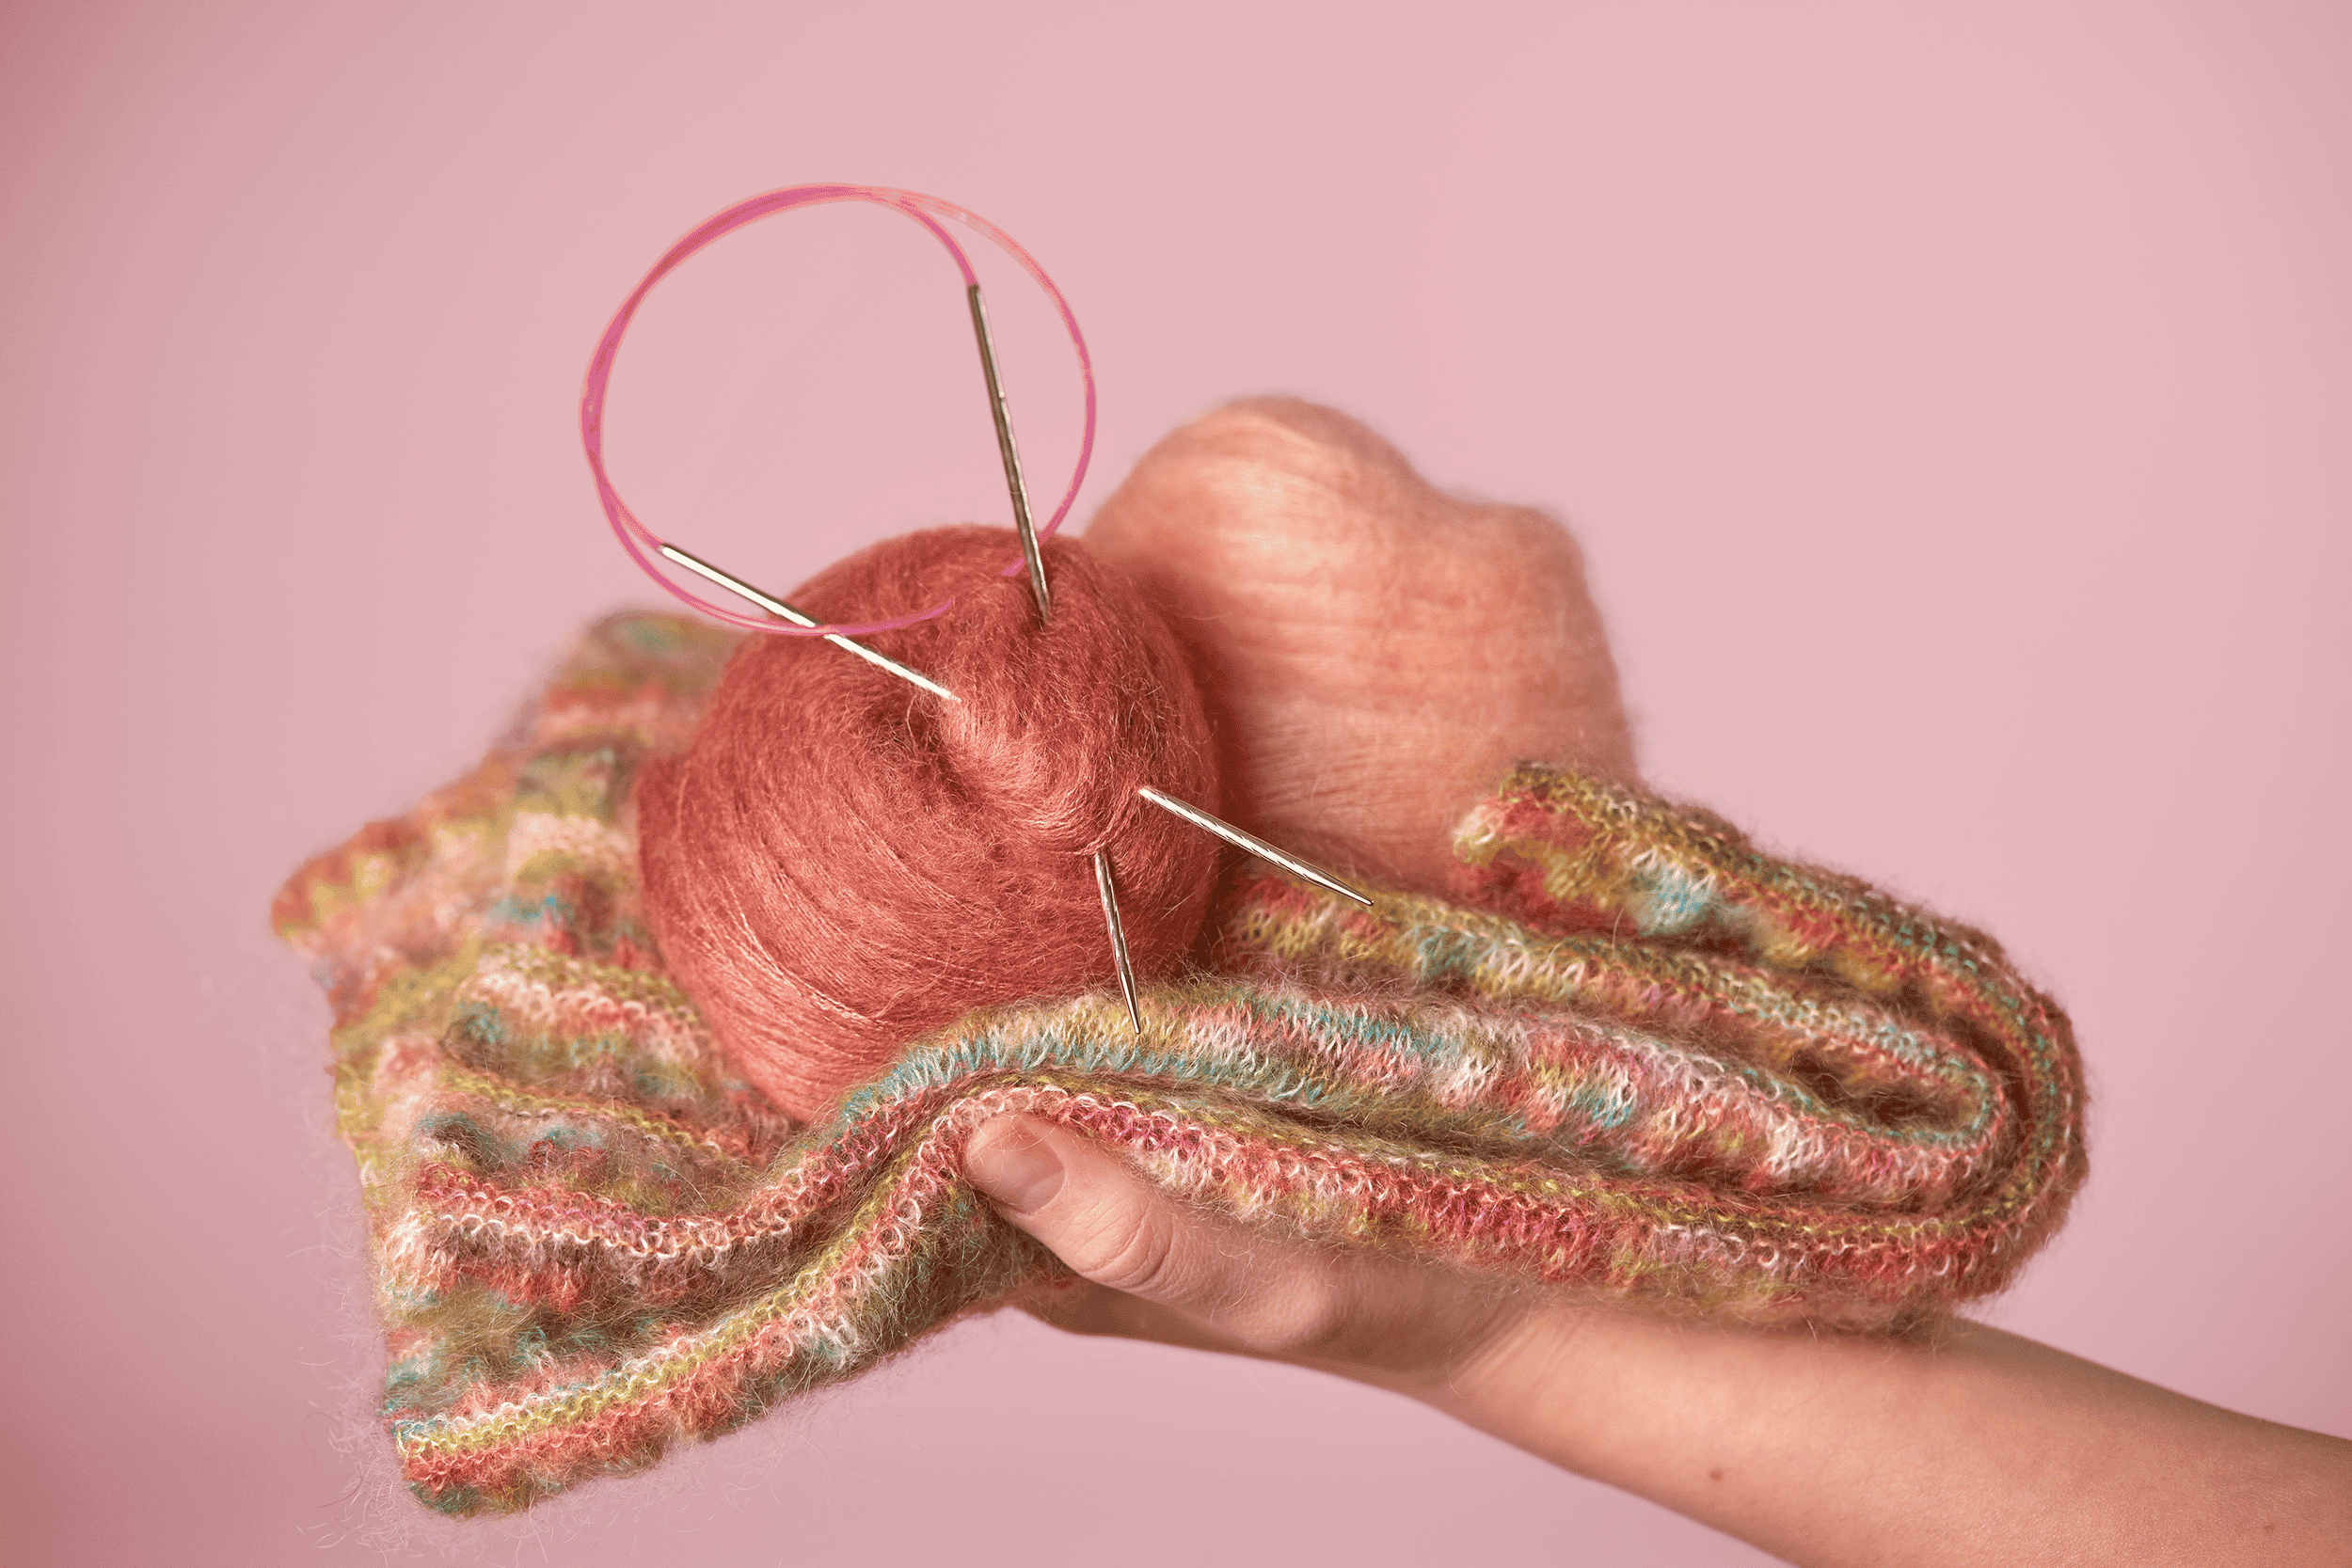 115 7 addiUnicorn circular knitting needle cicular knitting needle metal 2 8mm 60 150cm US 1 11 24 60 madeinGermany Sideshot1 rgb quality,wool good quality recognise,Schulana,Lang Yarns,Interview